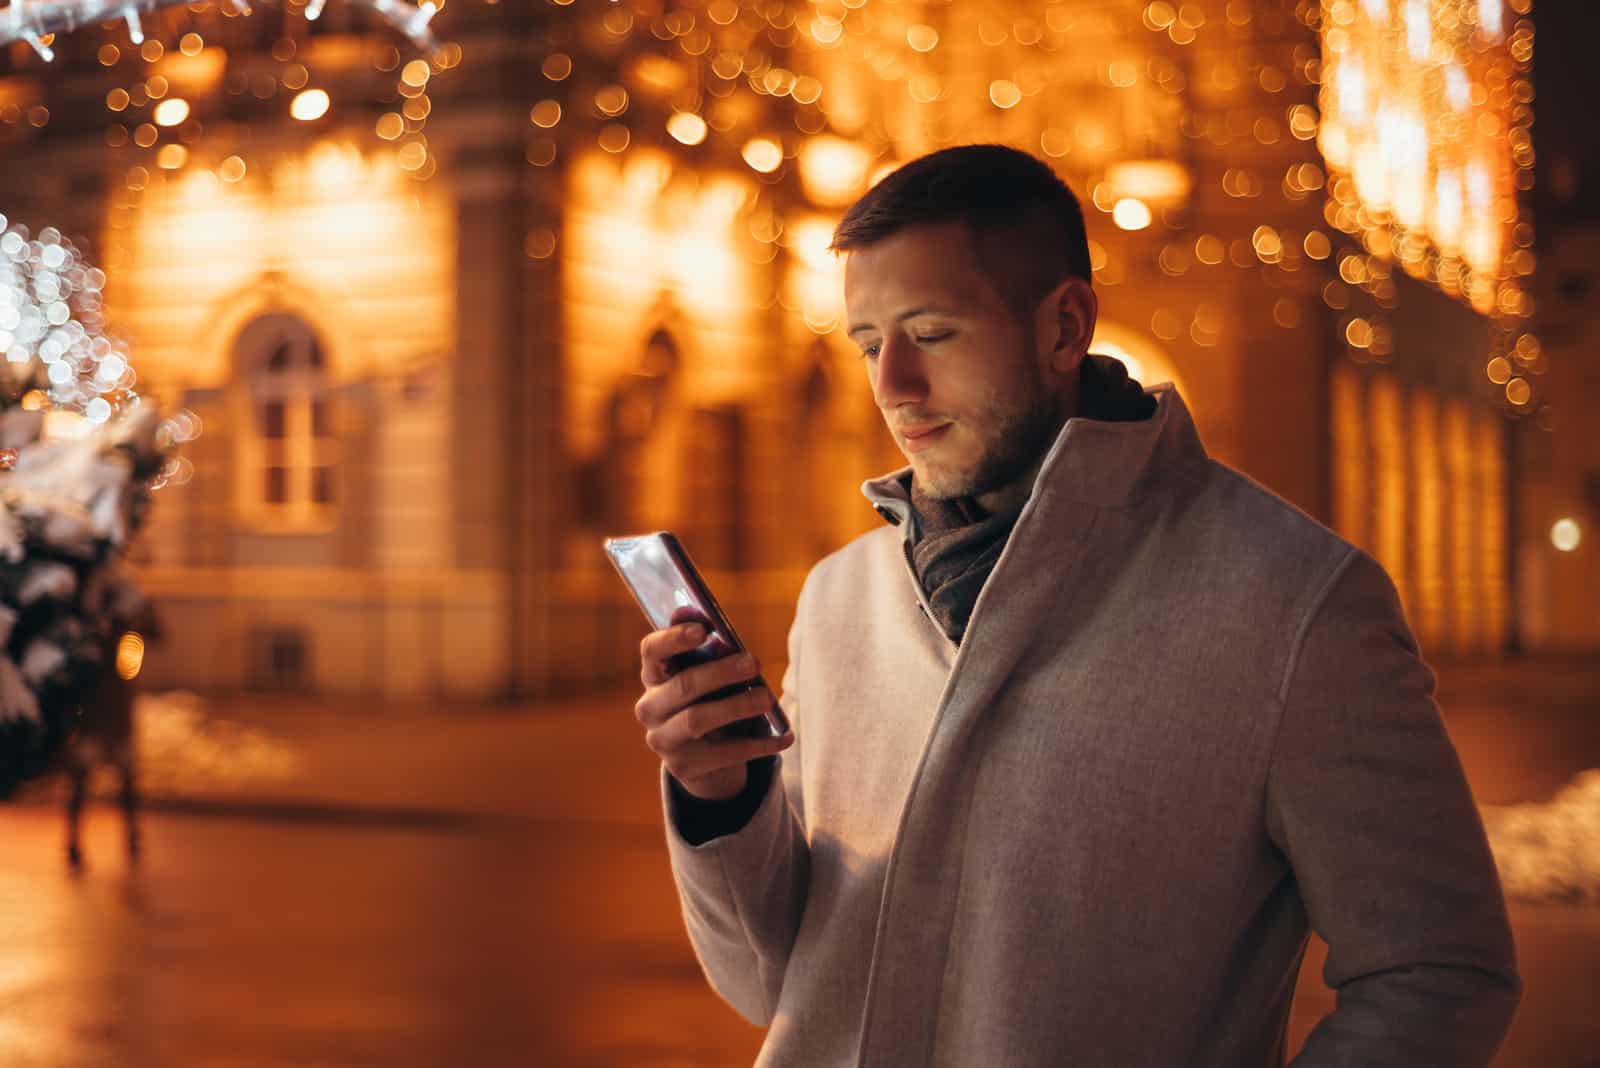 man walking at night texting